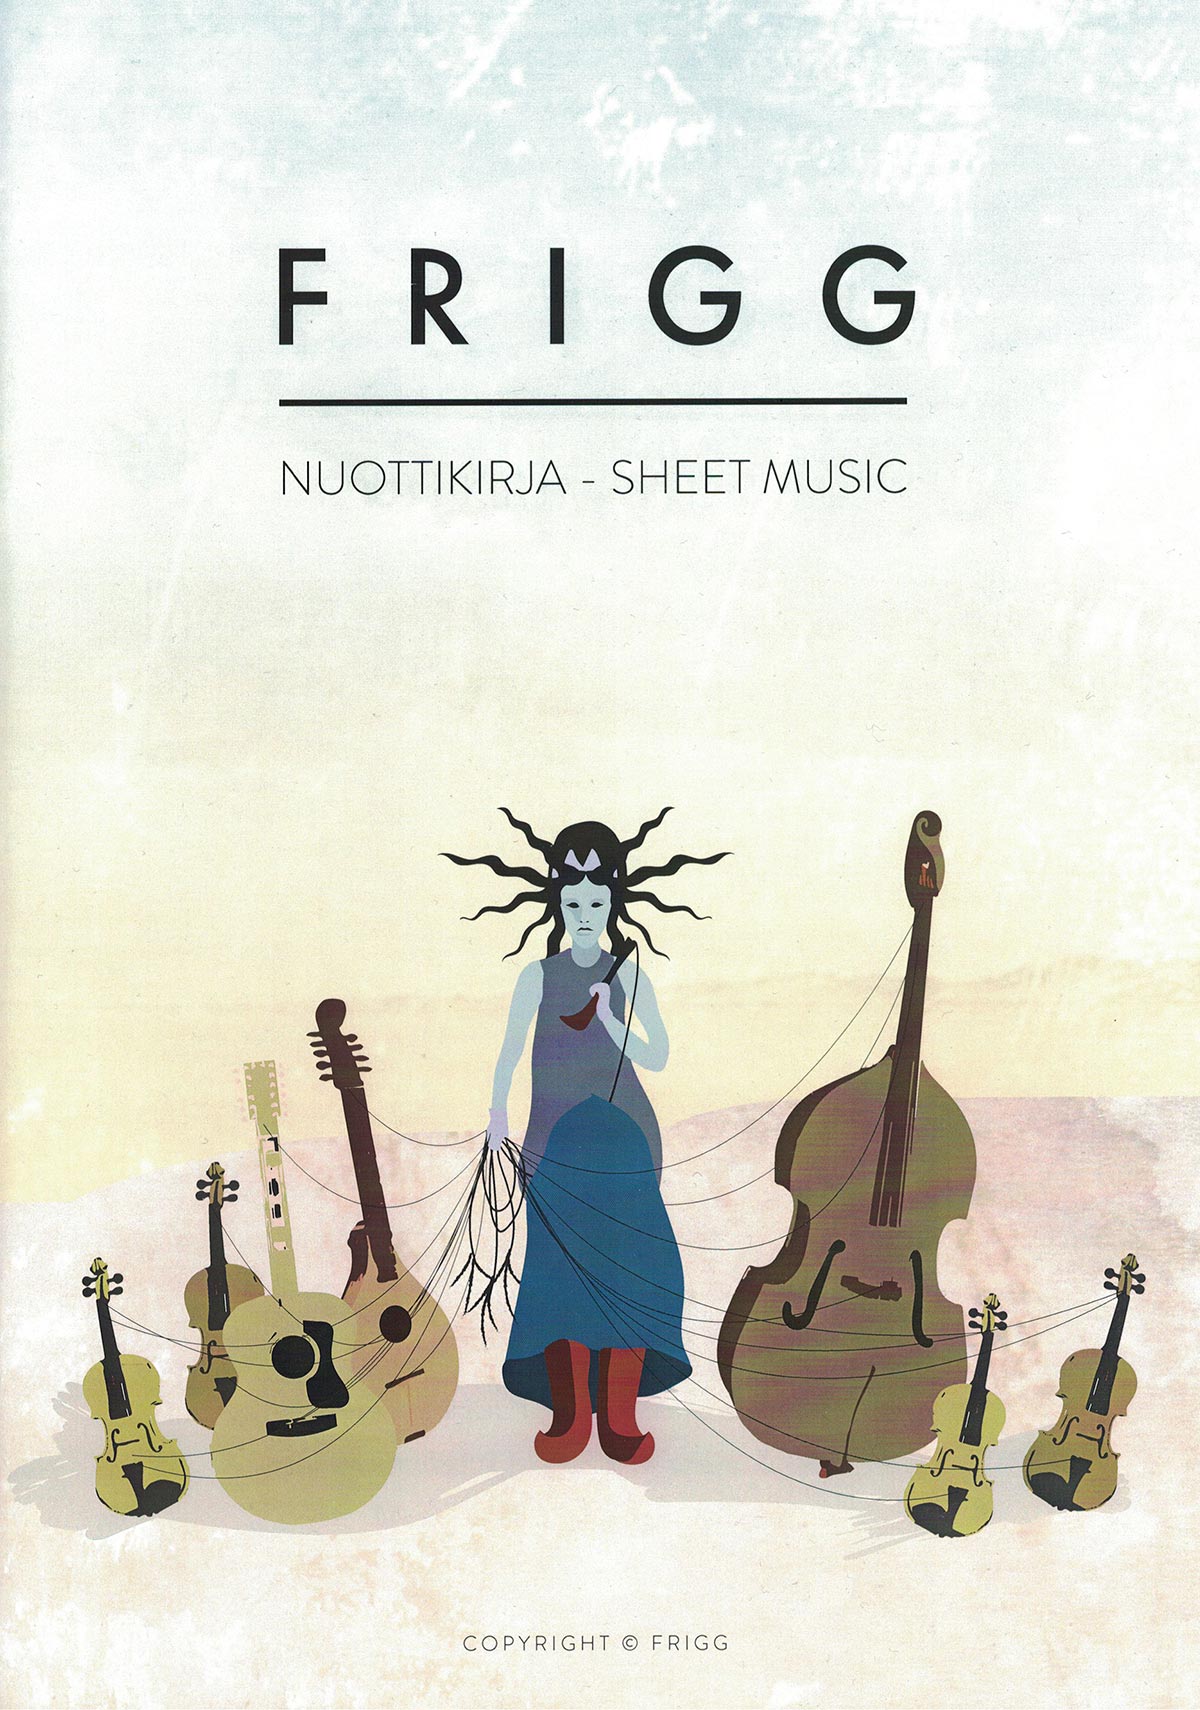 Frigg nuottikirja - Frigg sheet music